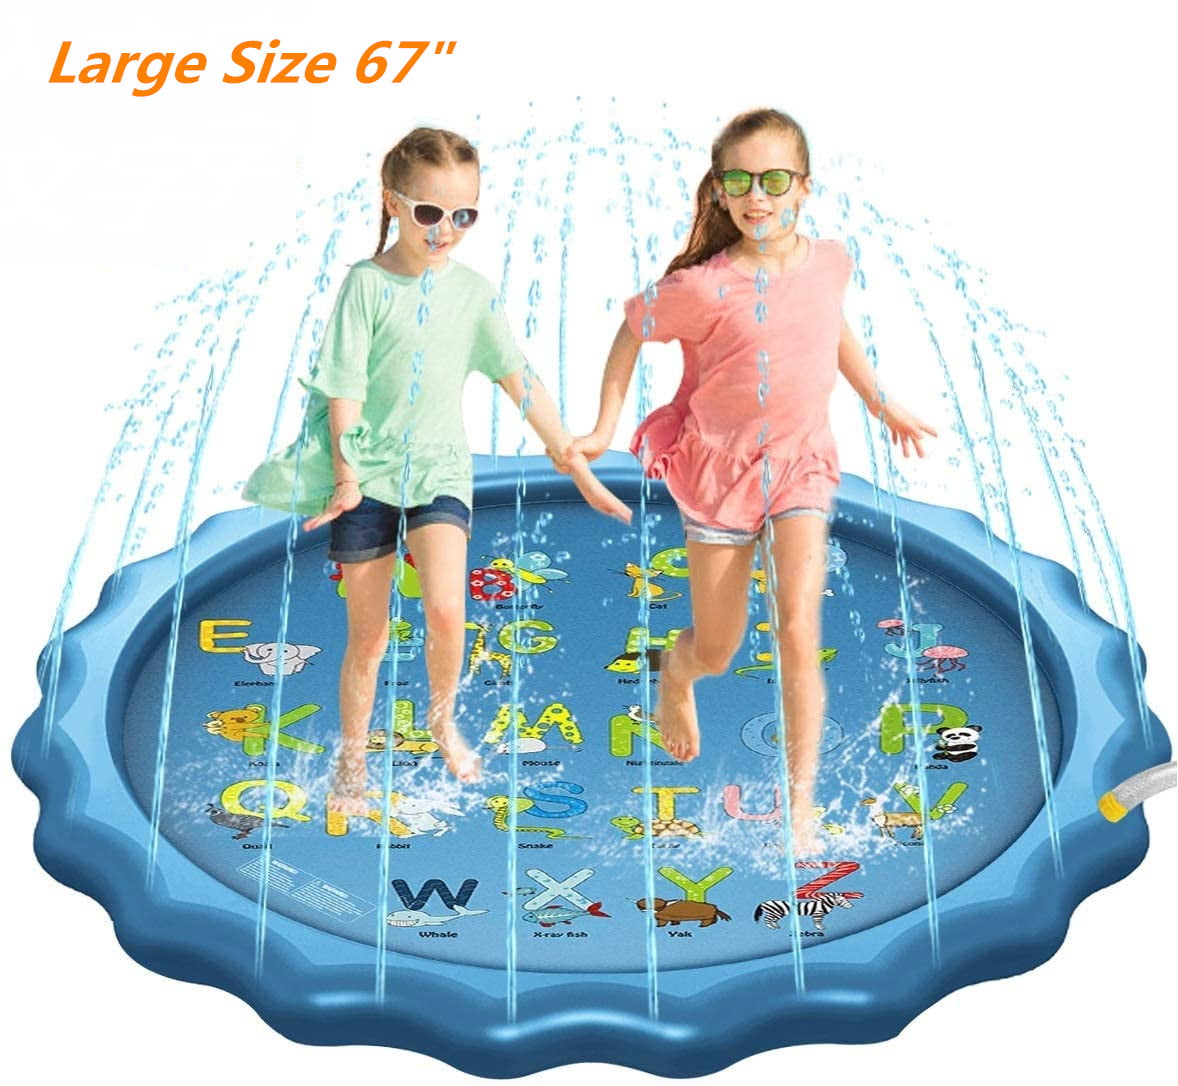 Splash Pad 67 Inches Outdoor Water Sprinkler Pool Sprinkler for Kids Boys Girls 